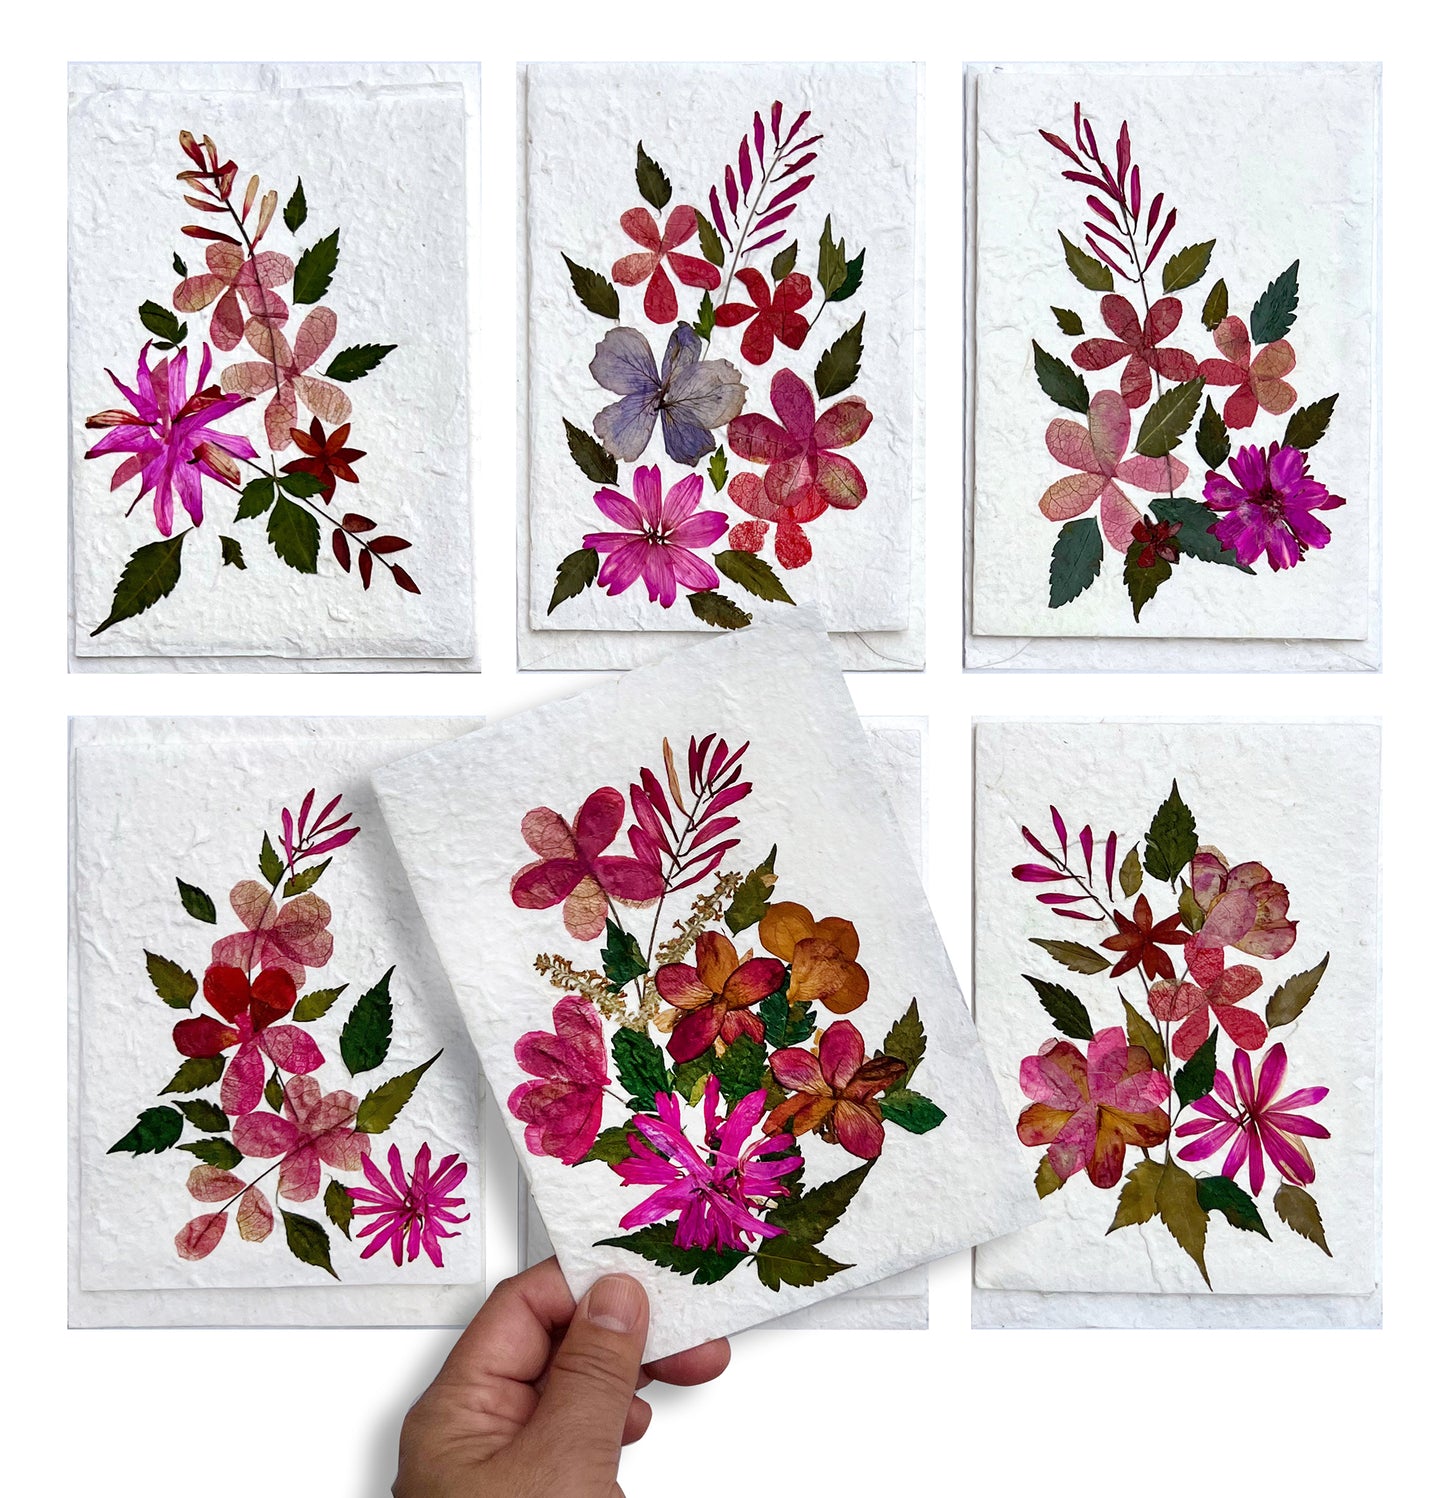 Handmade Mulberry Paper Greeting Card  5x7 Inch Random Pack (6 Random Delight)